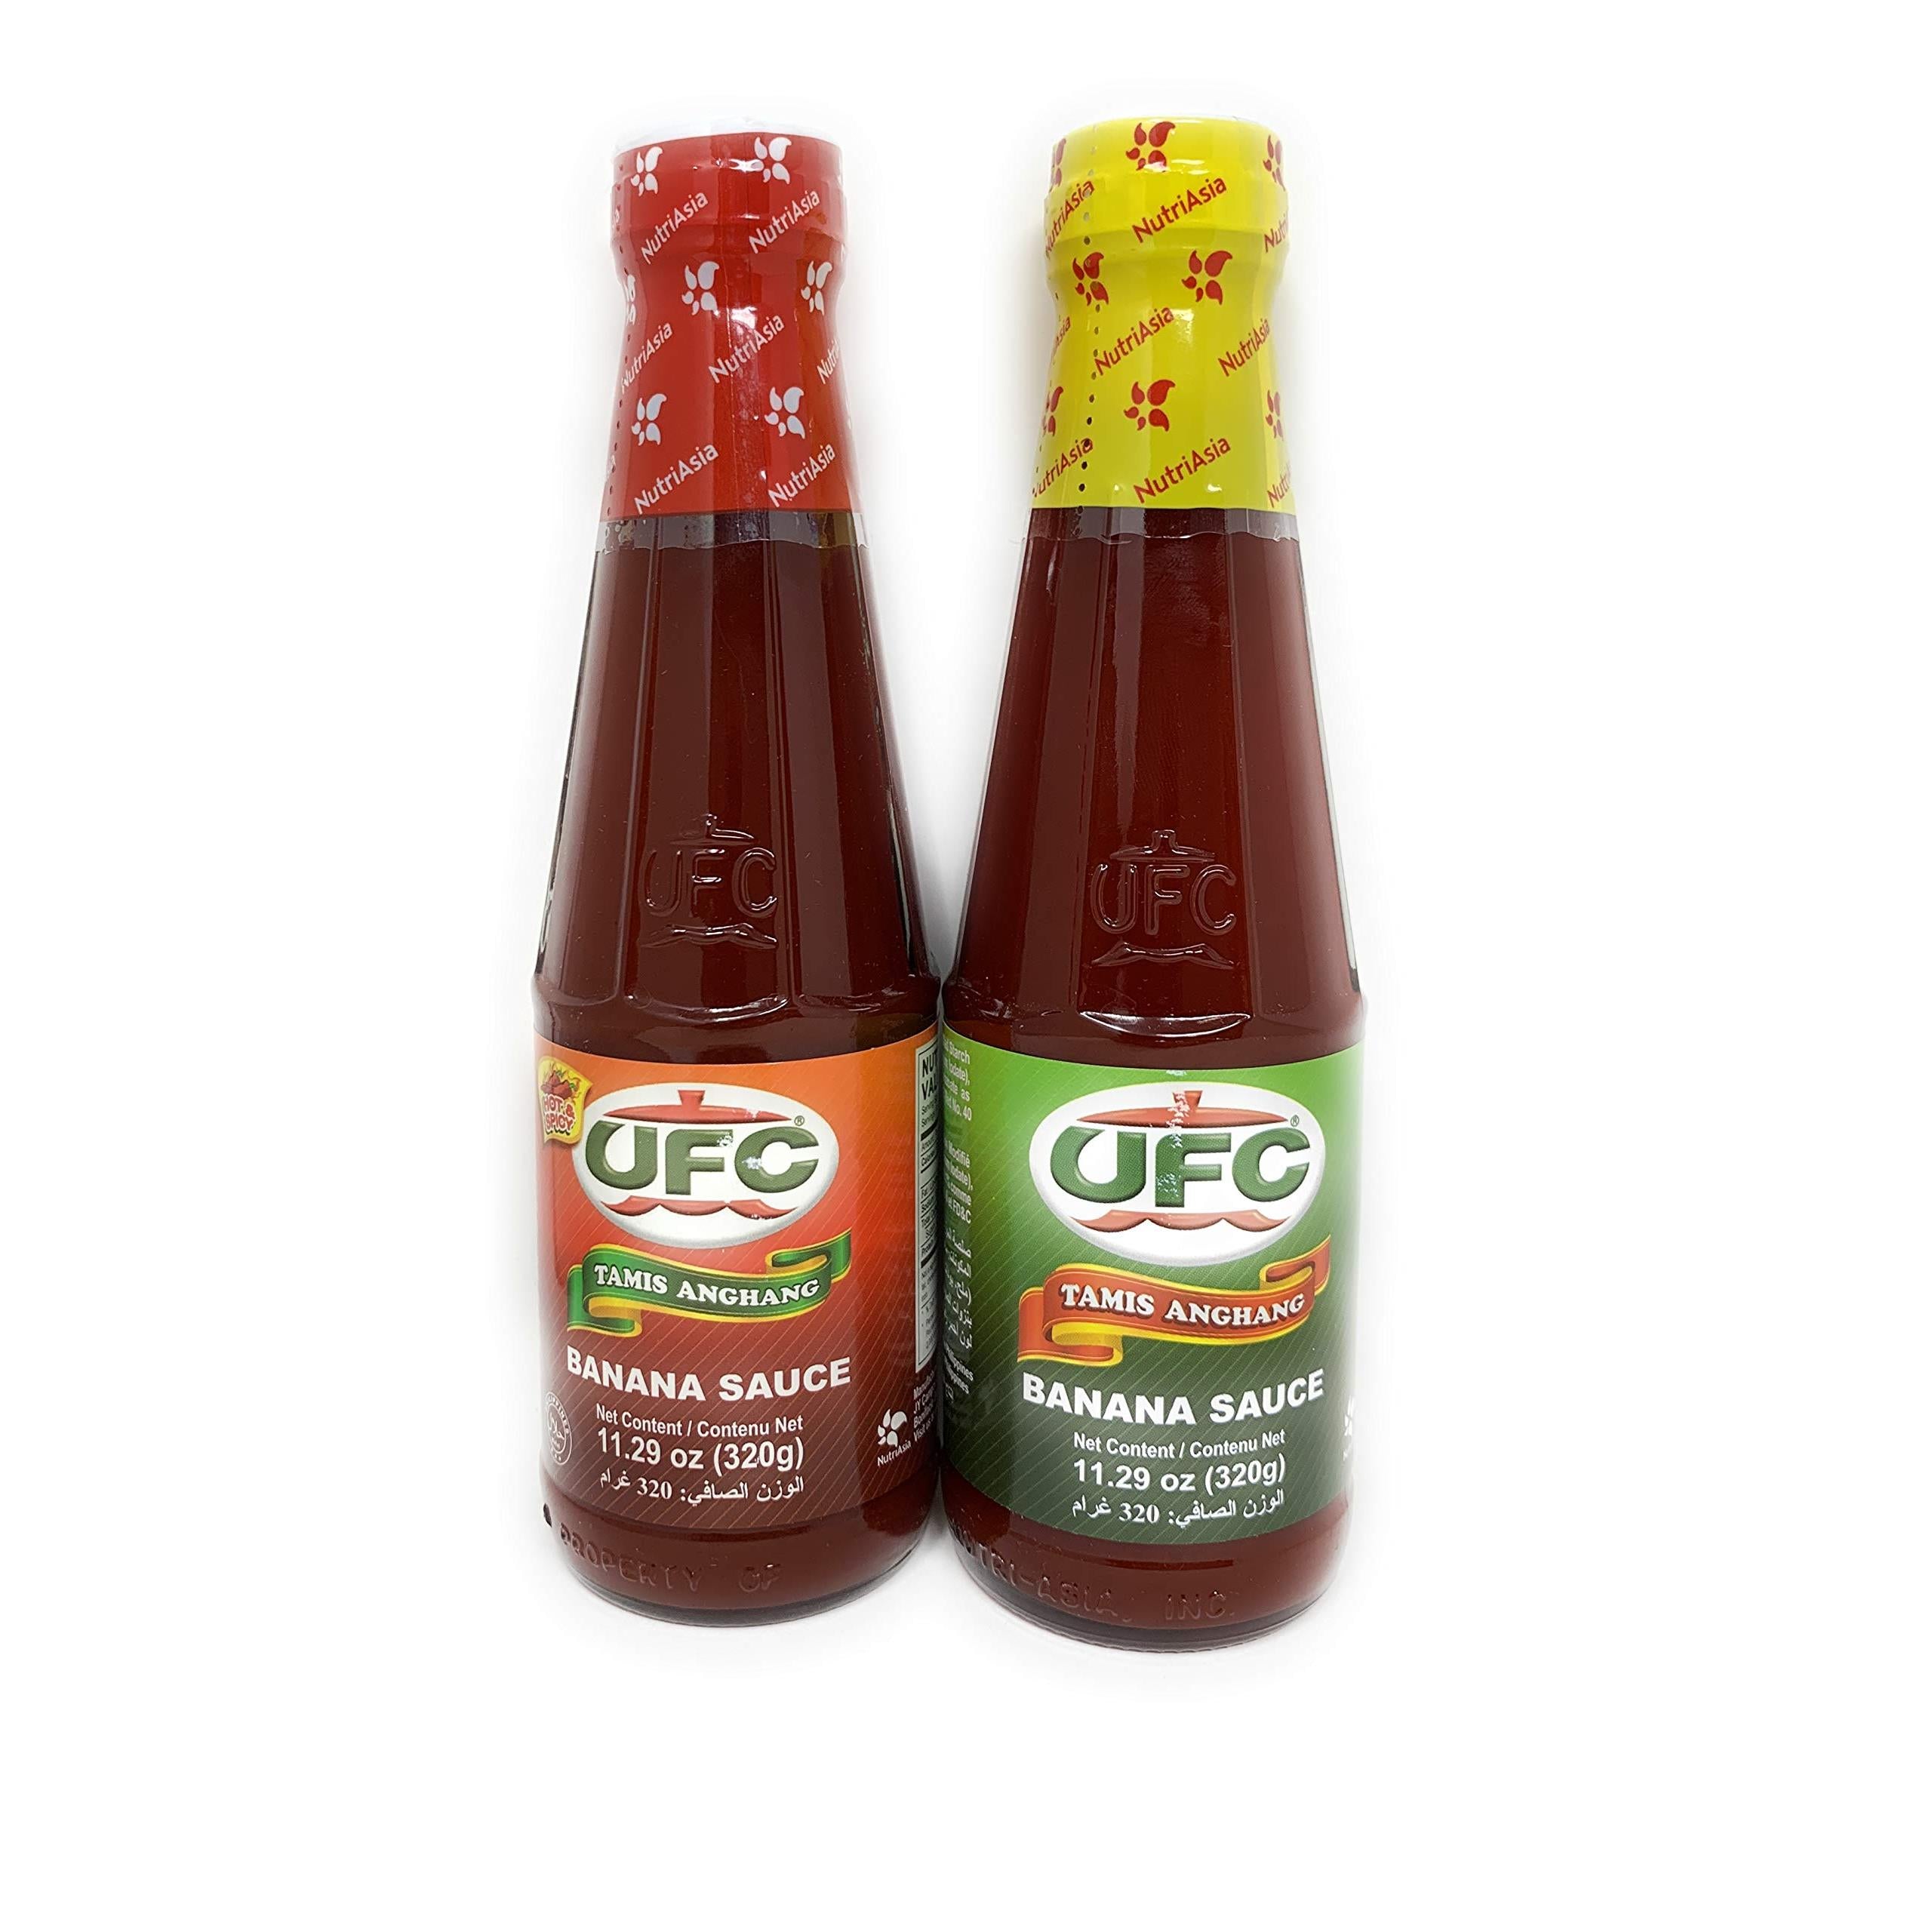 UFC Tamis Anghang Banana Sauce Bundle - Hot & Spicy, Regular, Small 2 Pack